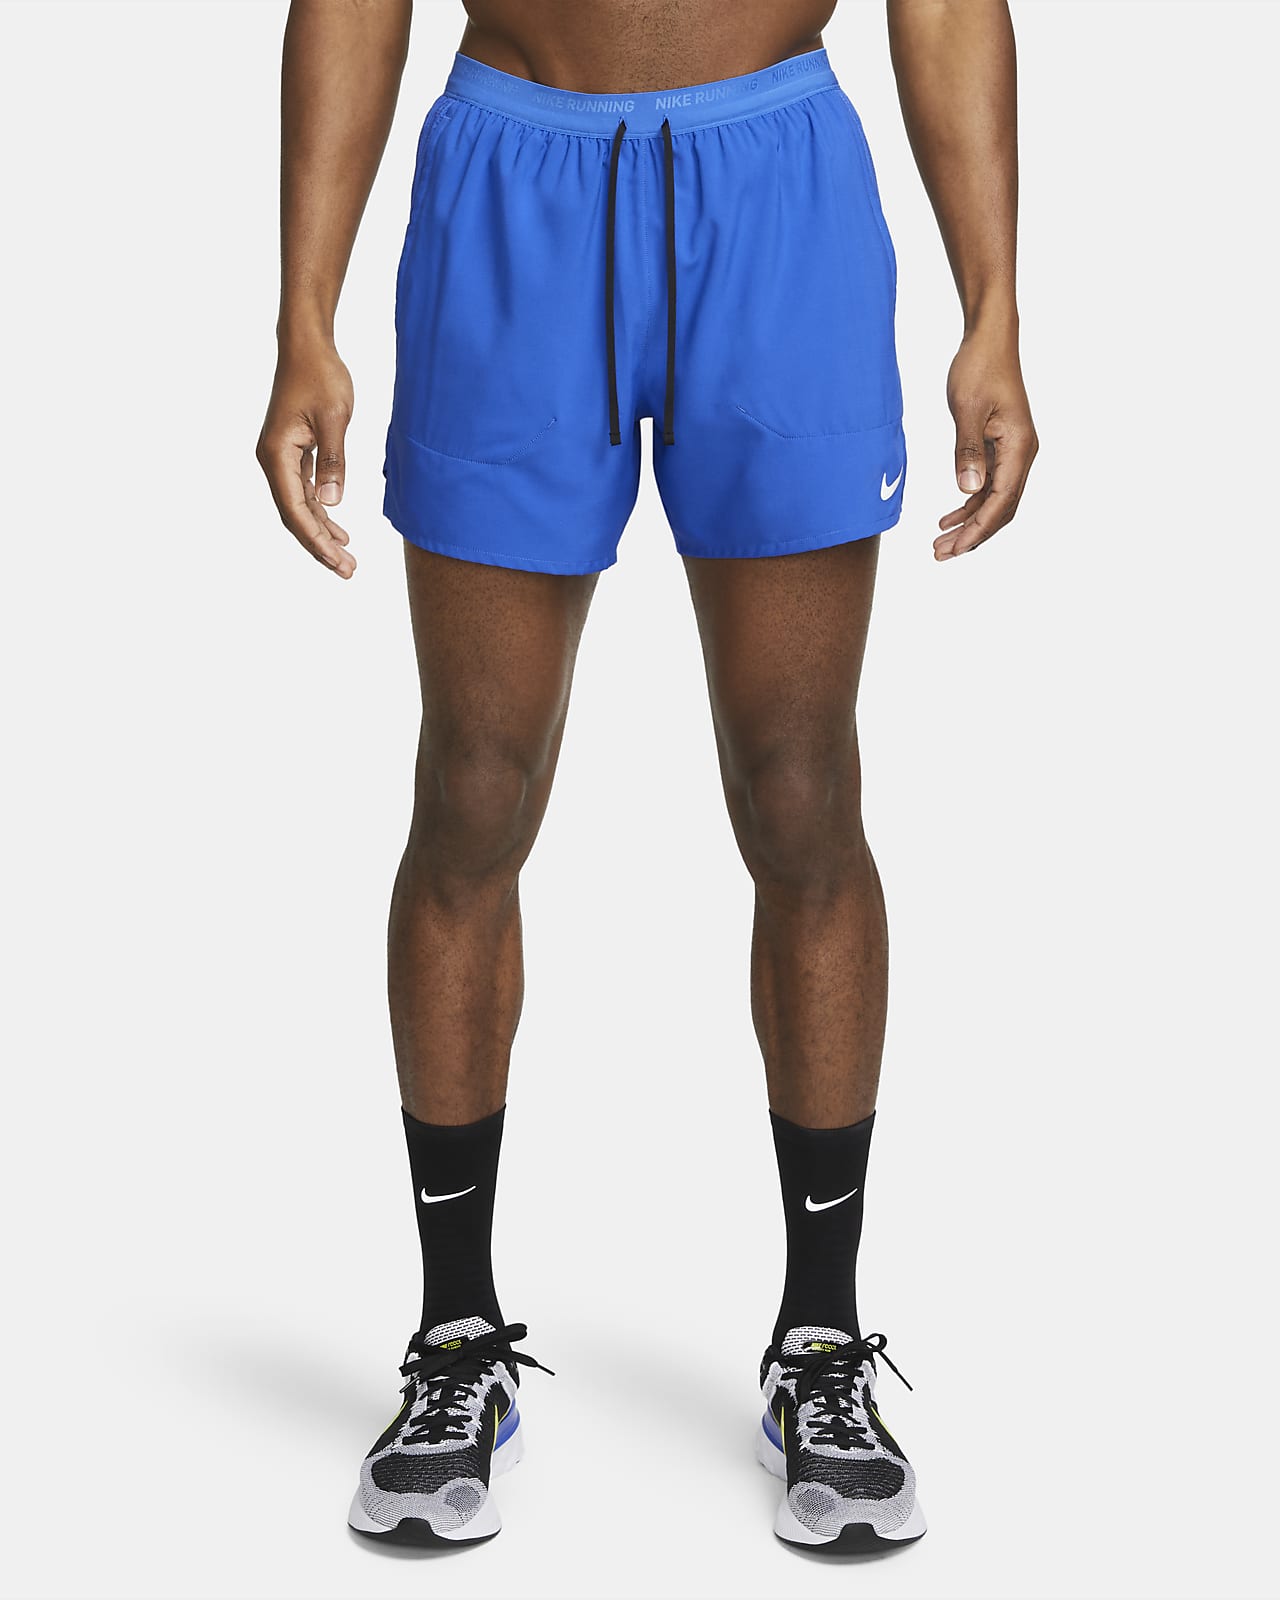 Shorts de running con forro de ropa interior Dri-FIT de  cm para hombre  Nike Stride. 